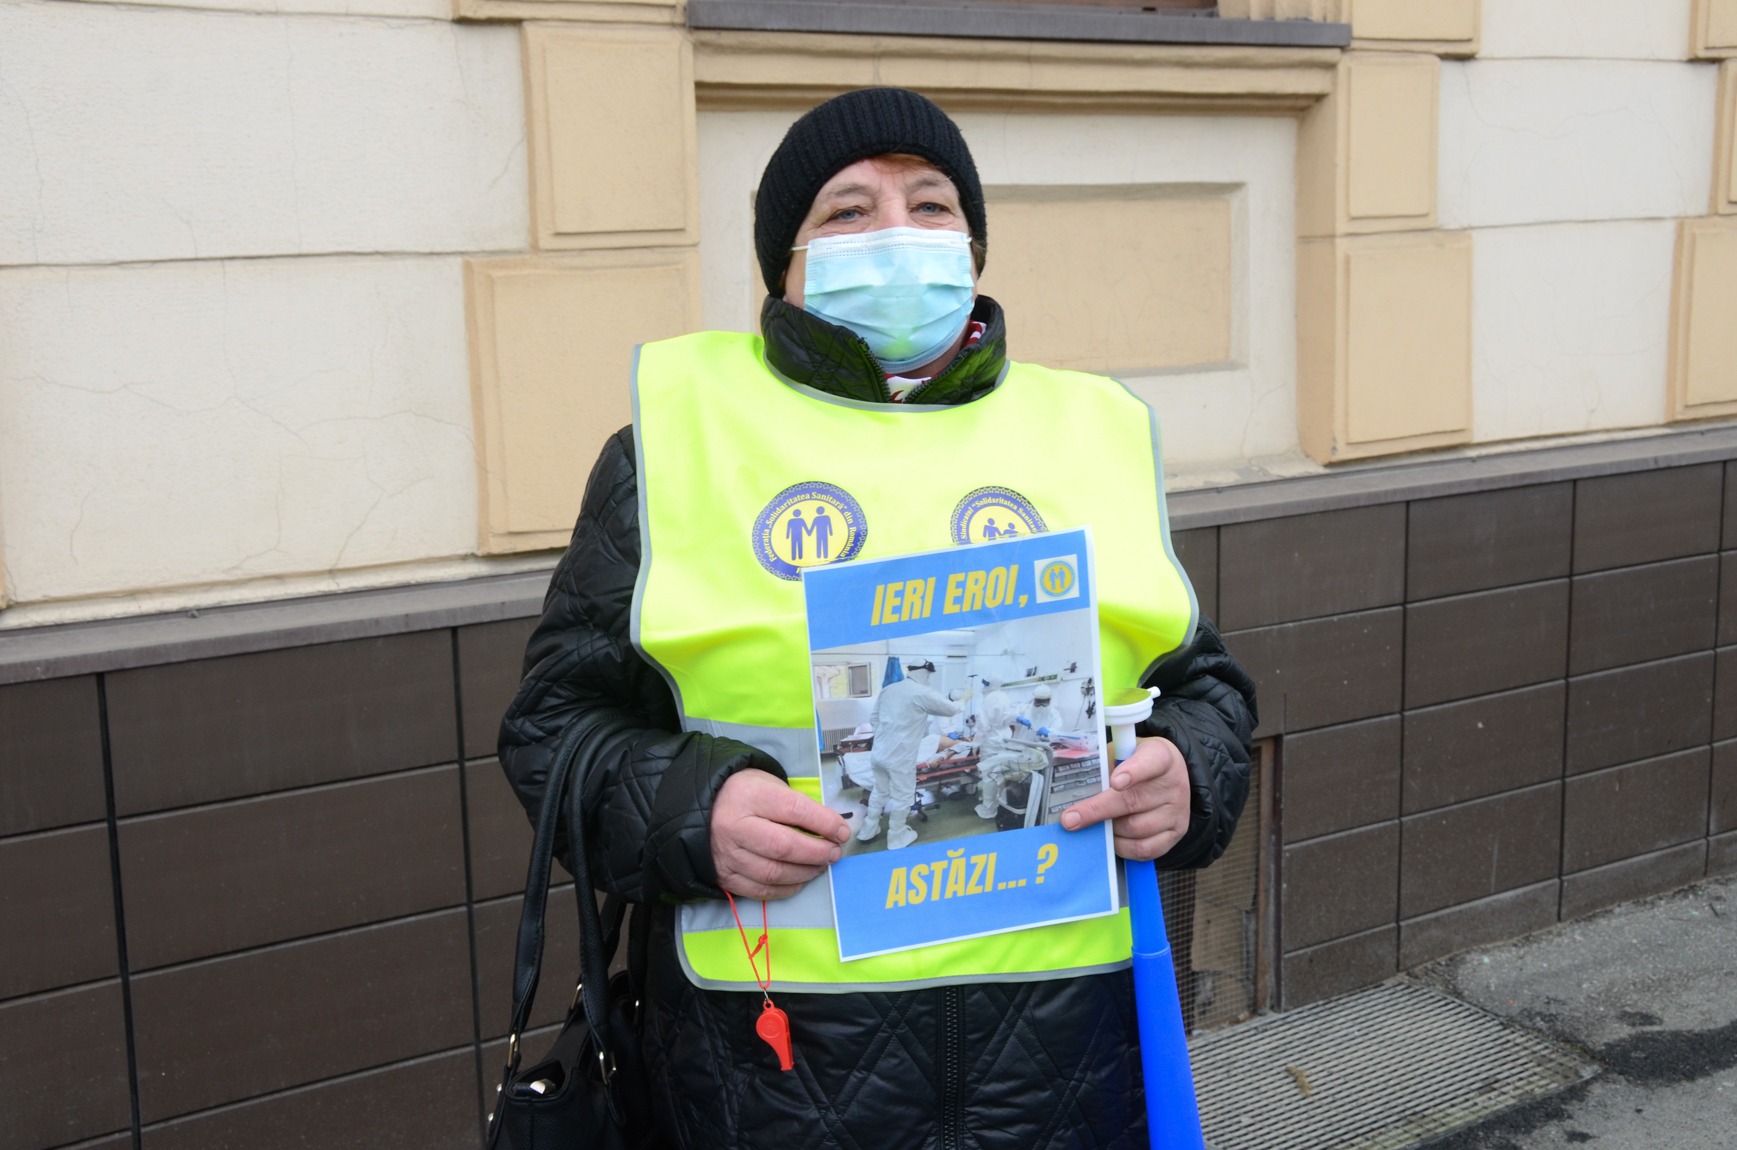 cadrele medicale au protestat in fata Prefecturii judetului Sibiu  of